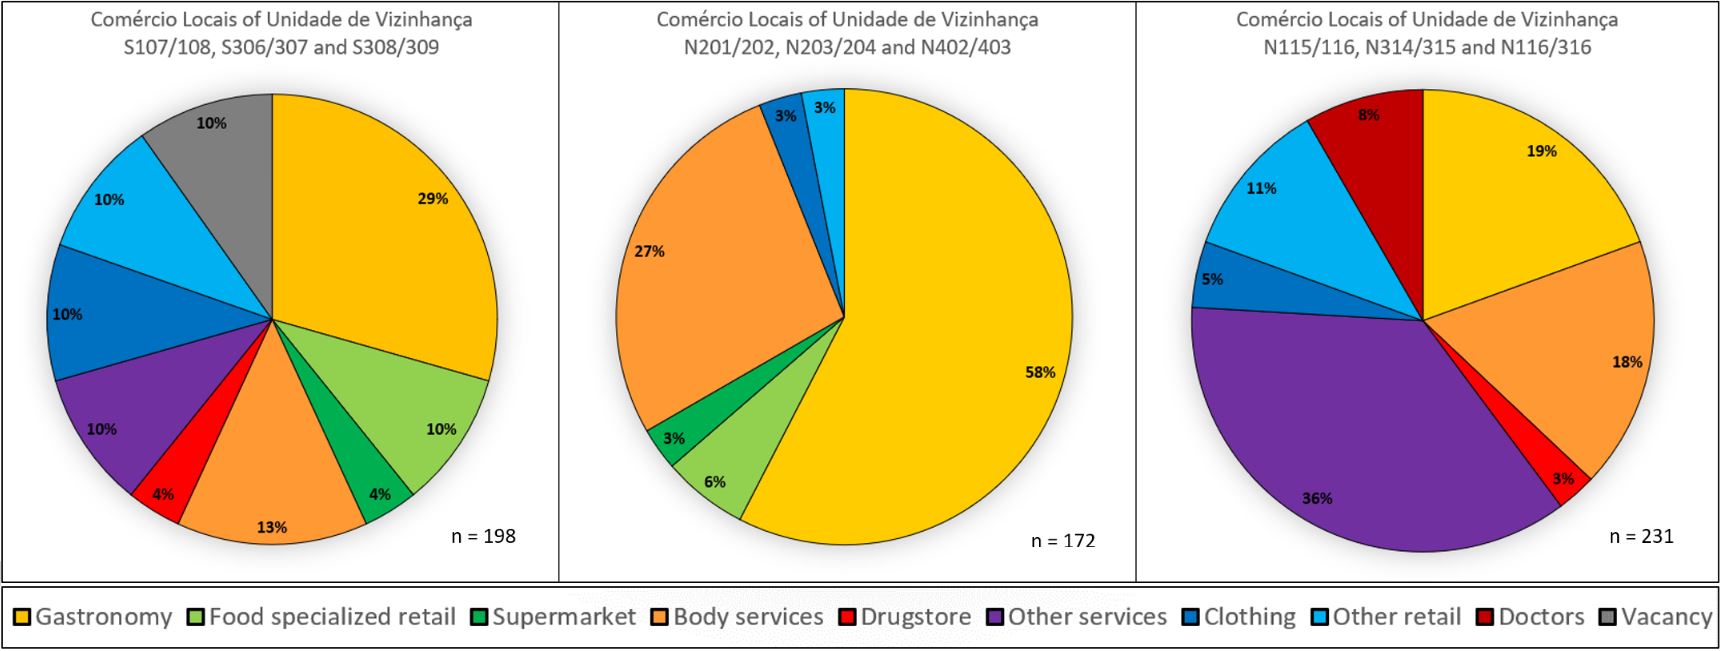 Figure 2: Distribution of commercial activities in the mapped Unidade de Vizinhanças. Source: own figure